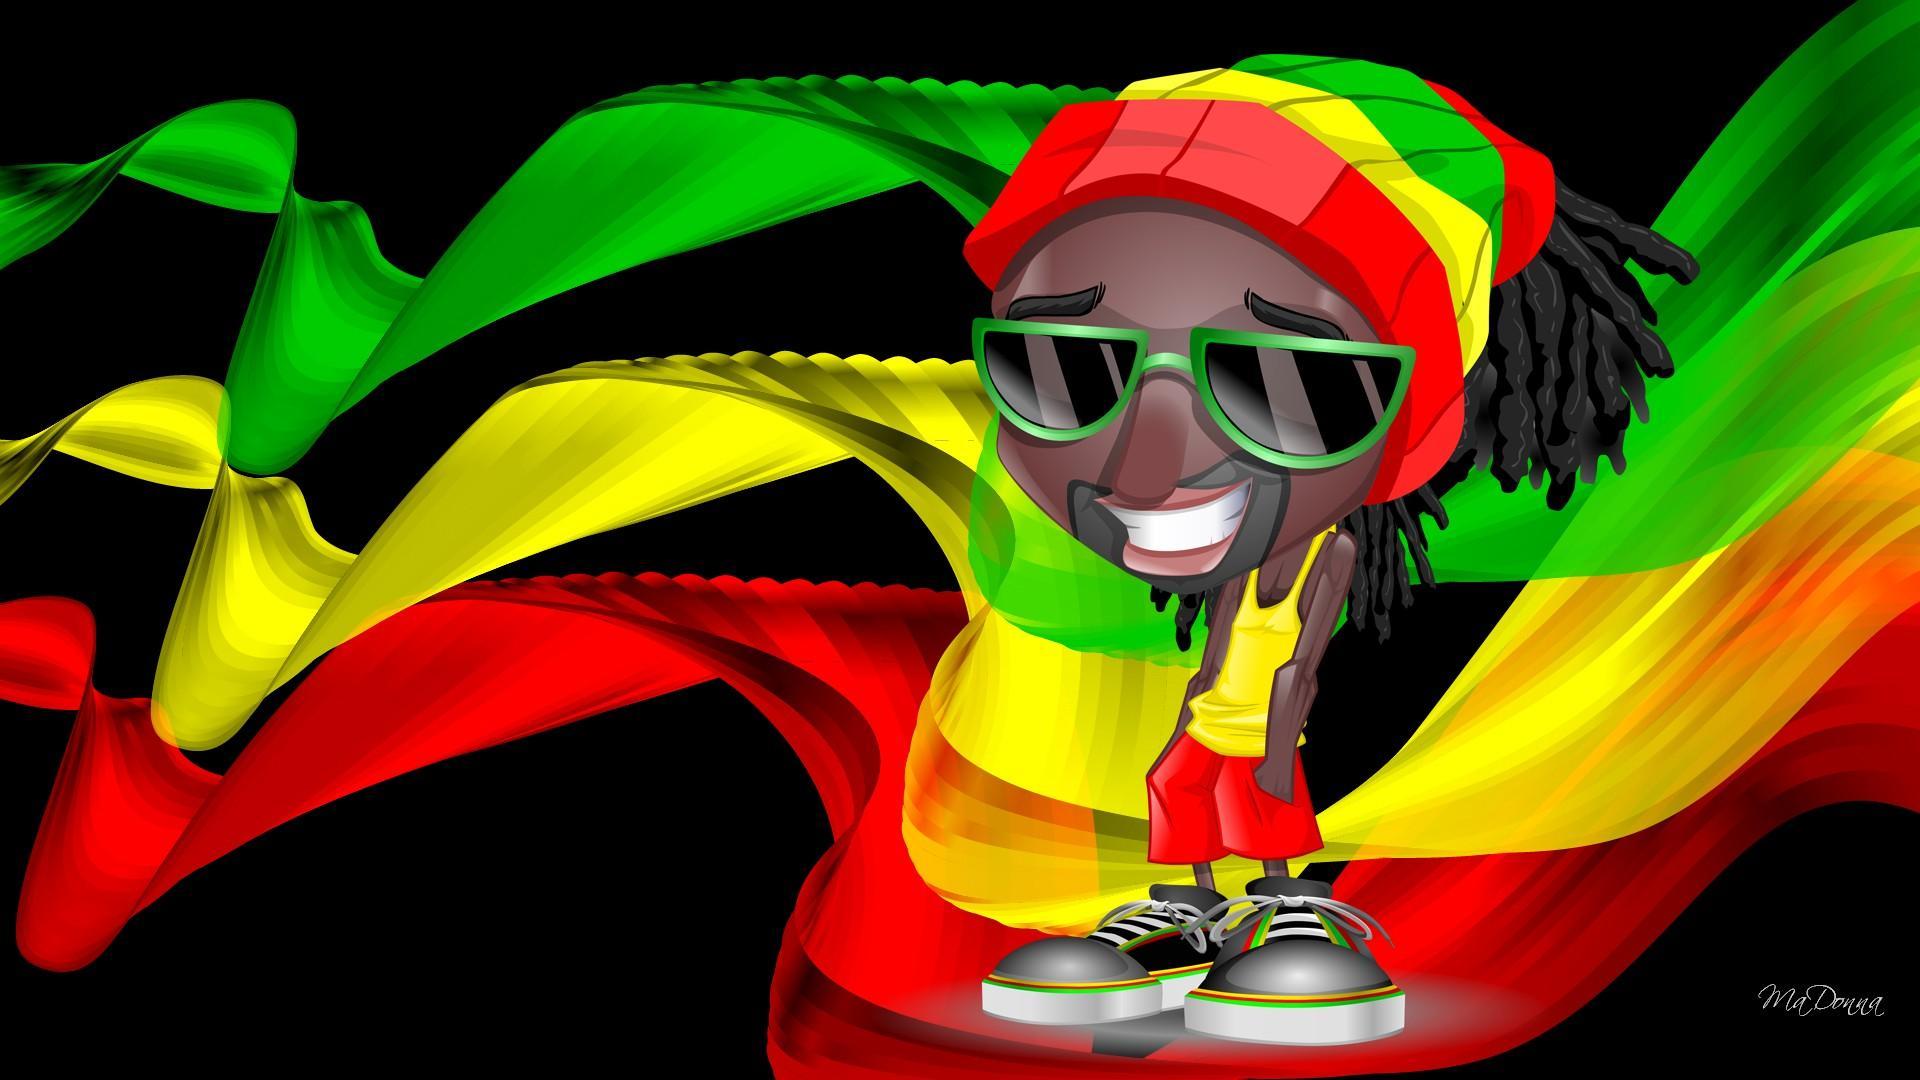 sfondi reggae per twitter